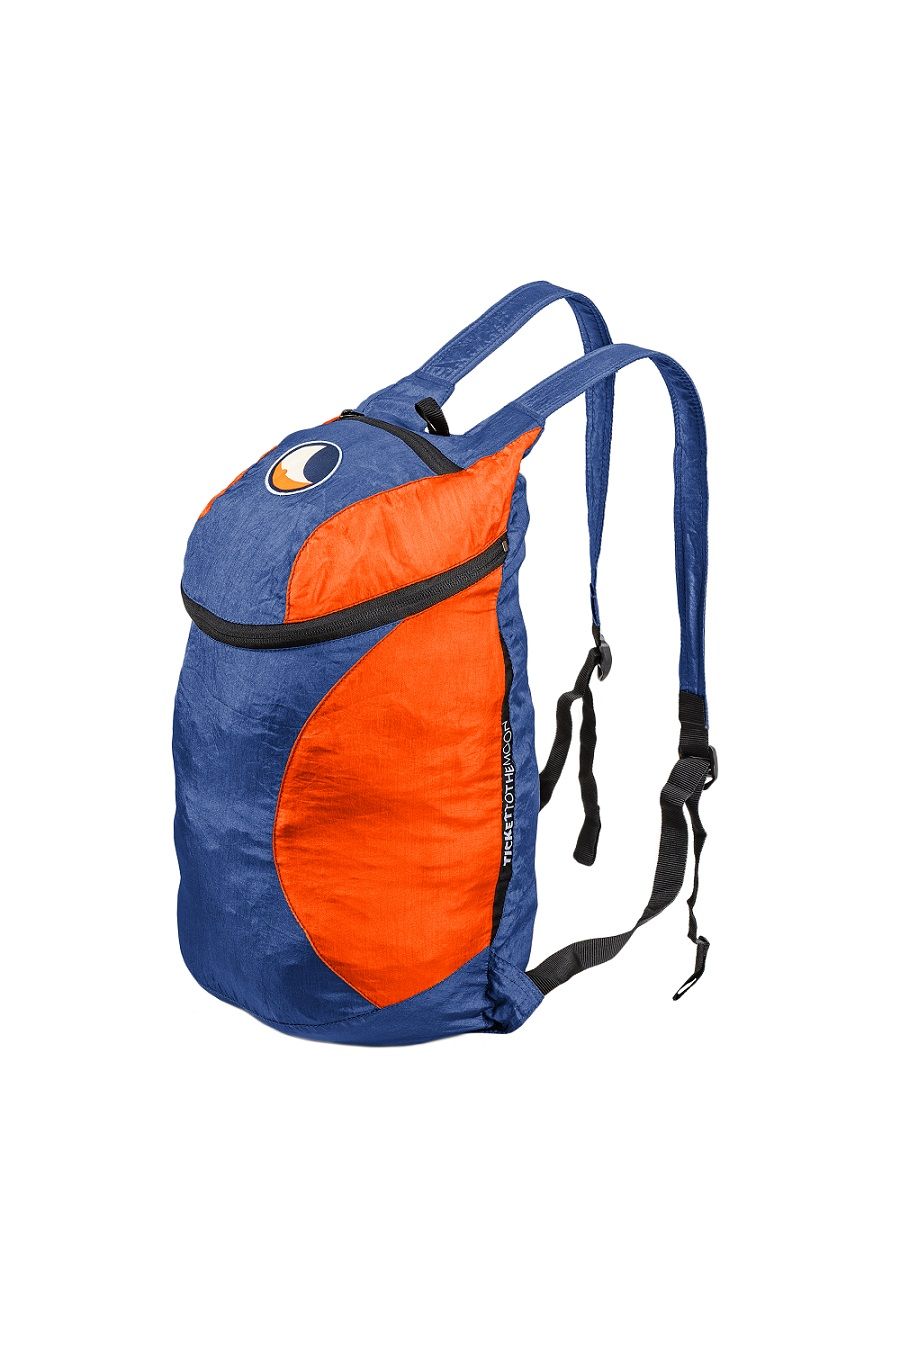 Rucksack "Mini Backpack" Royalblau / Orange,Indonesien